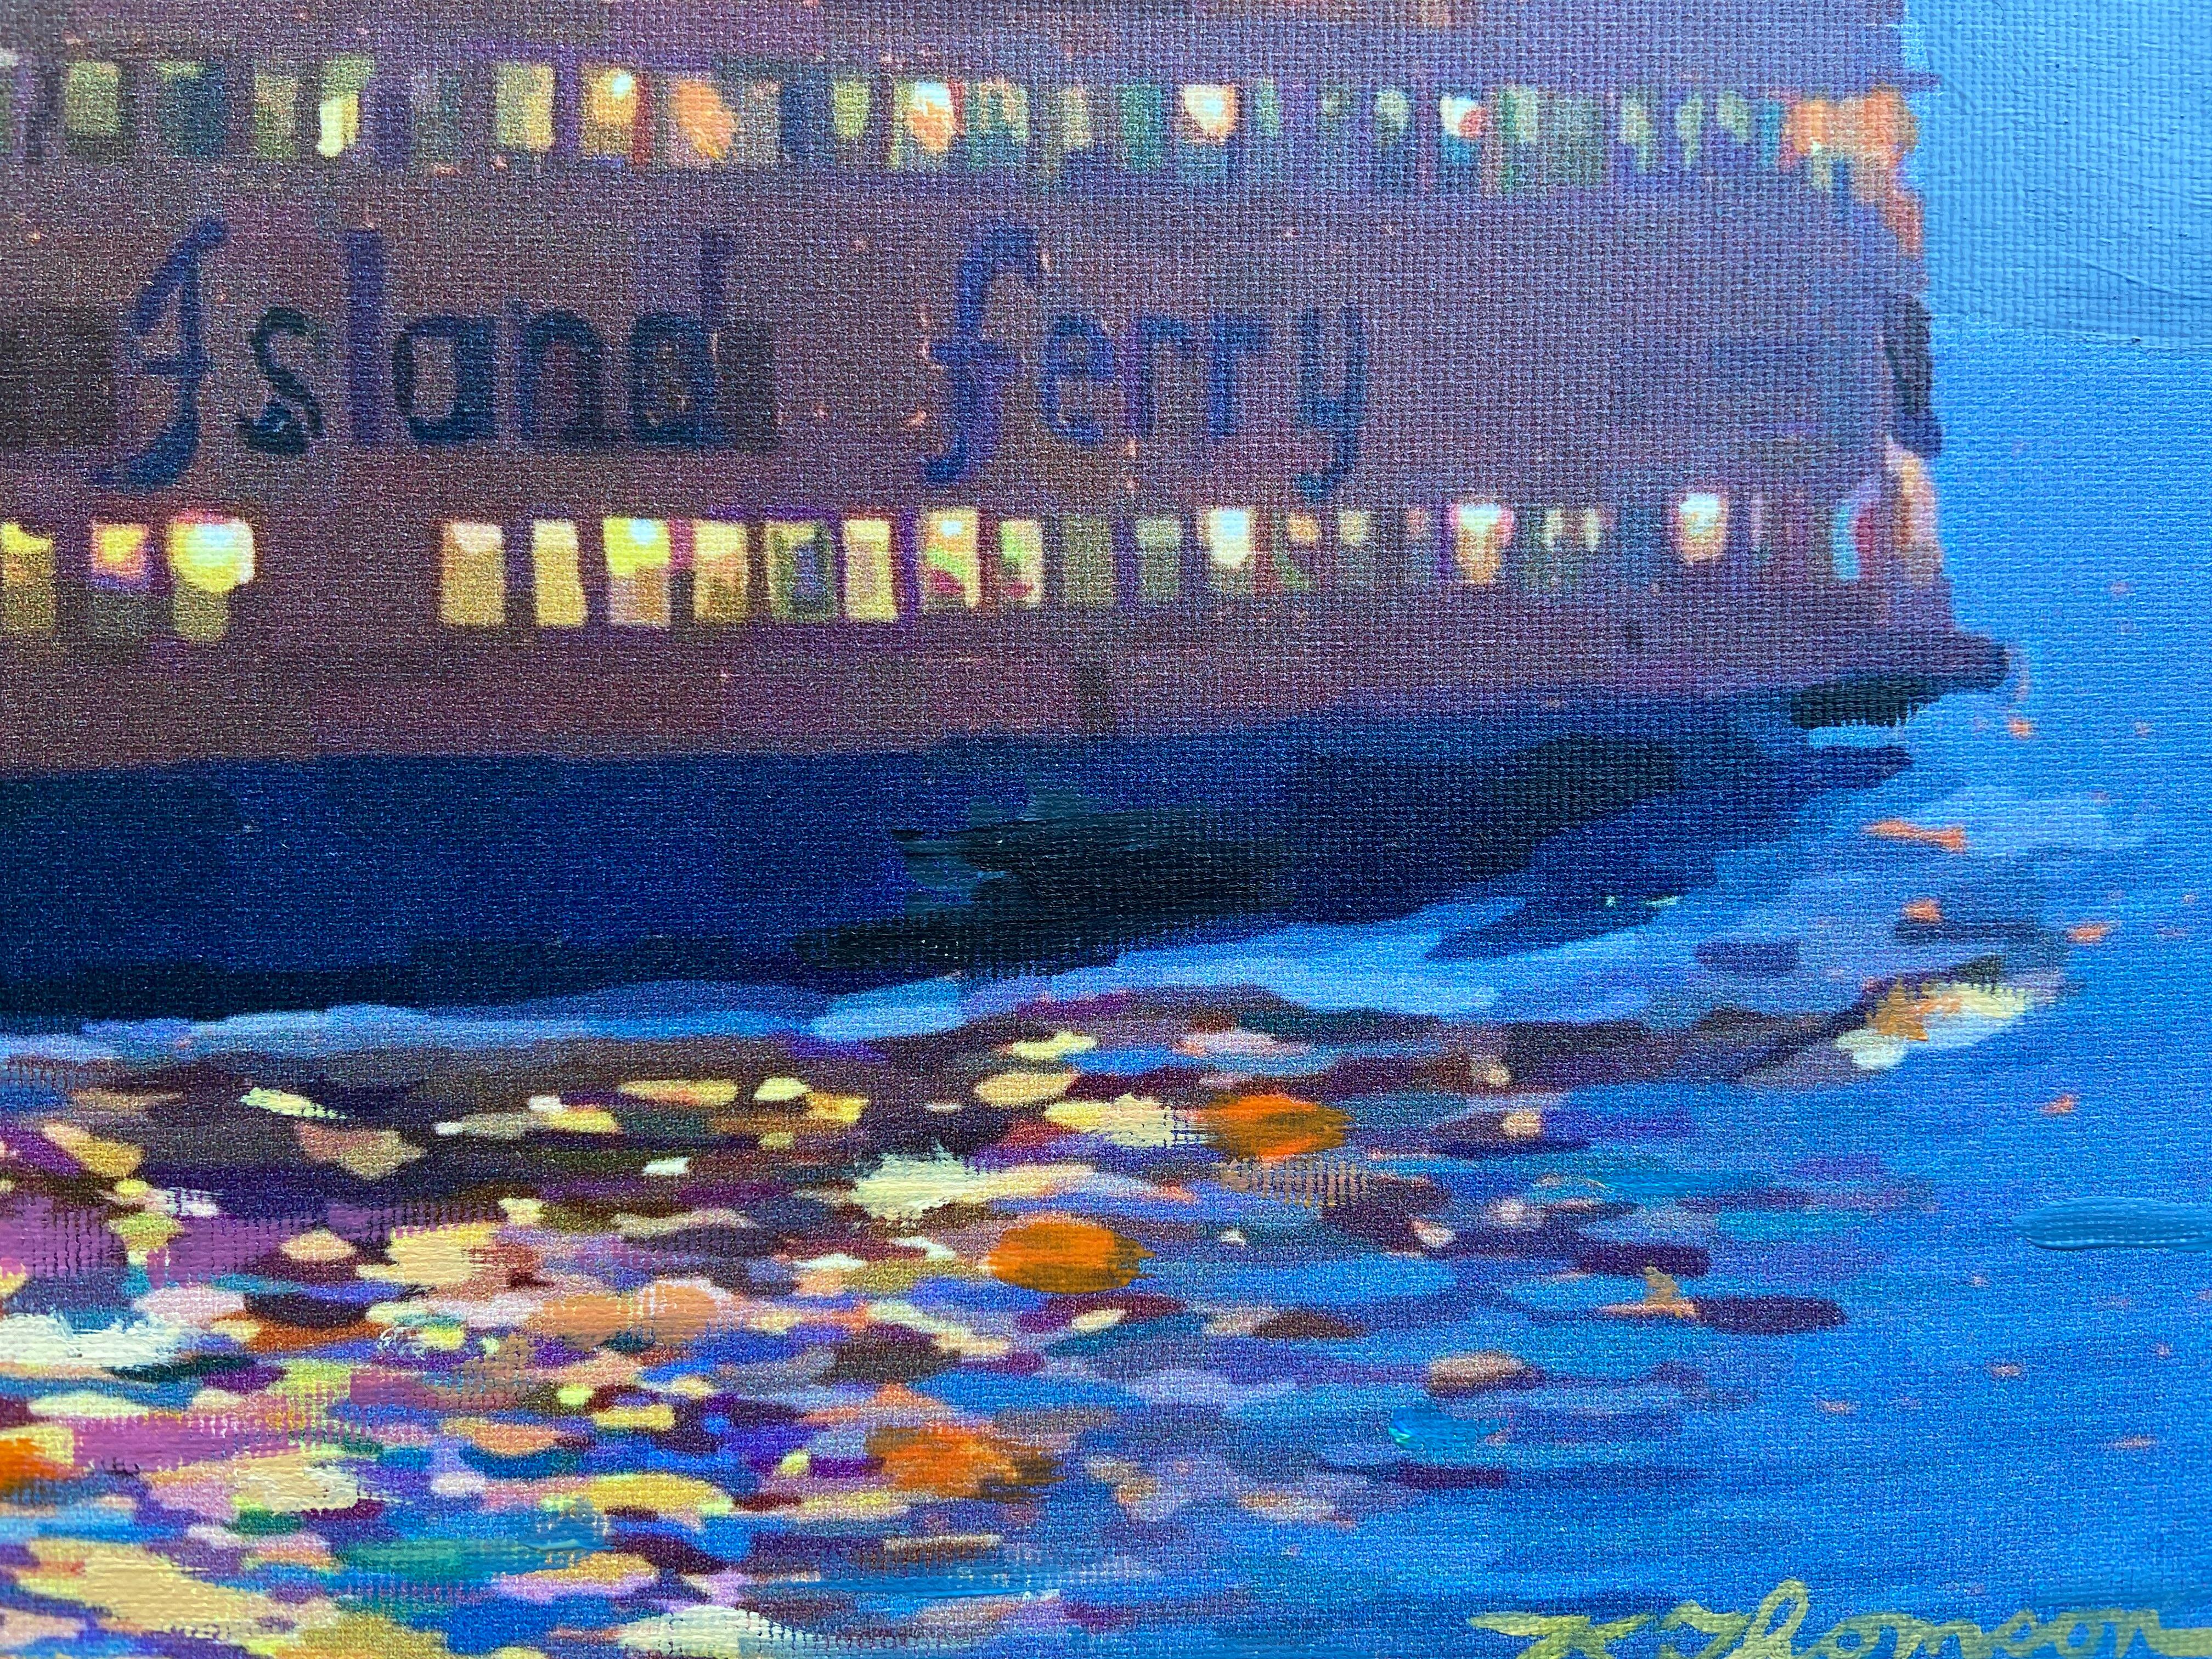 Staten Island Ferry, Original Painting 1